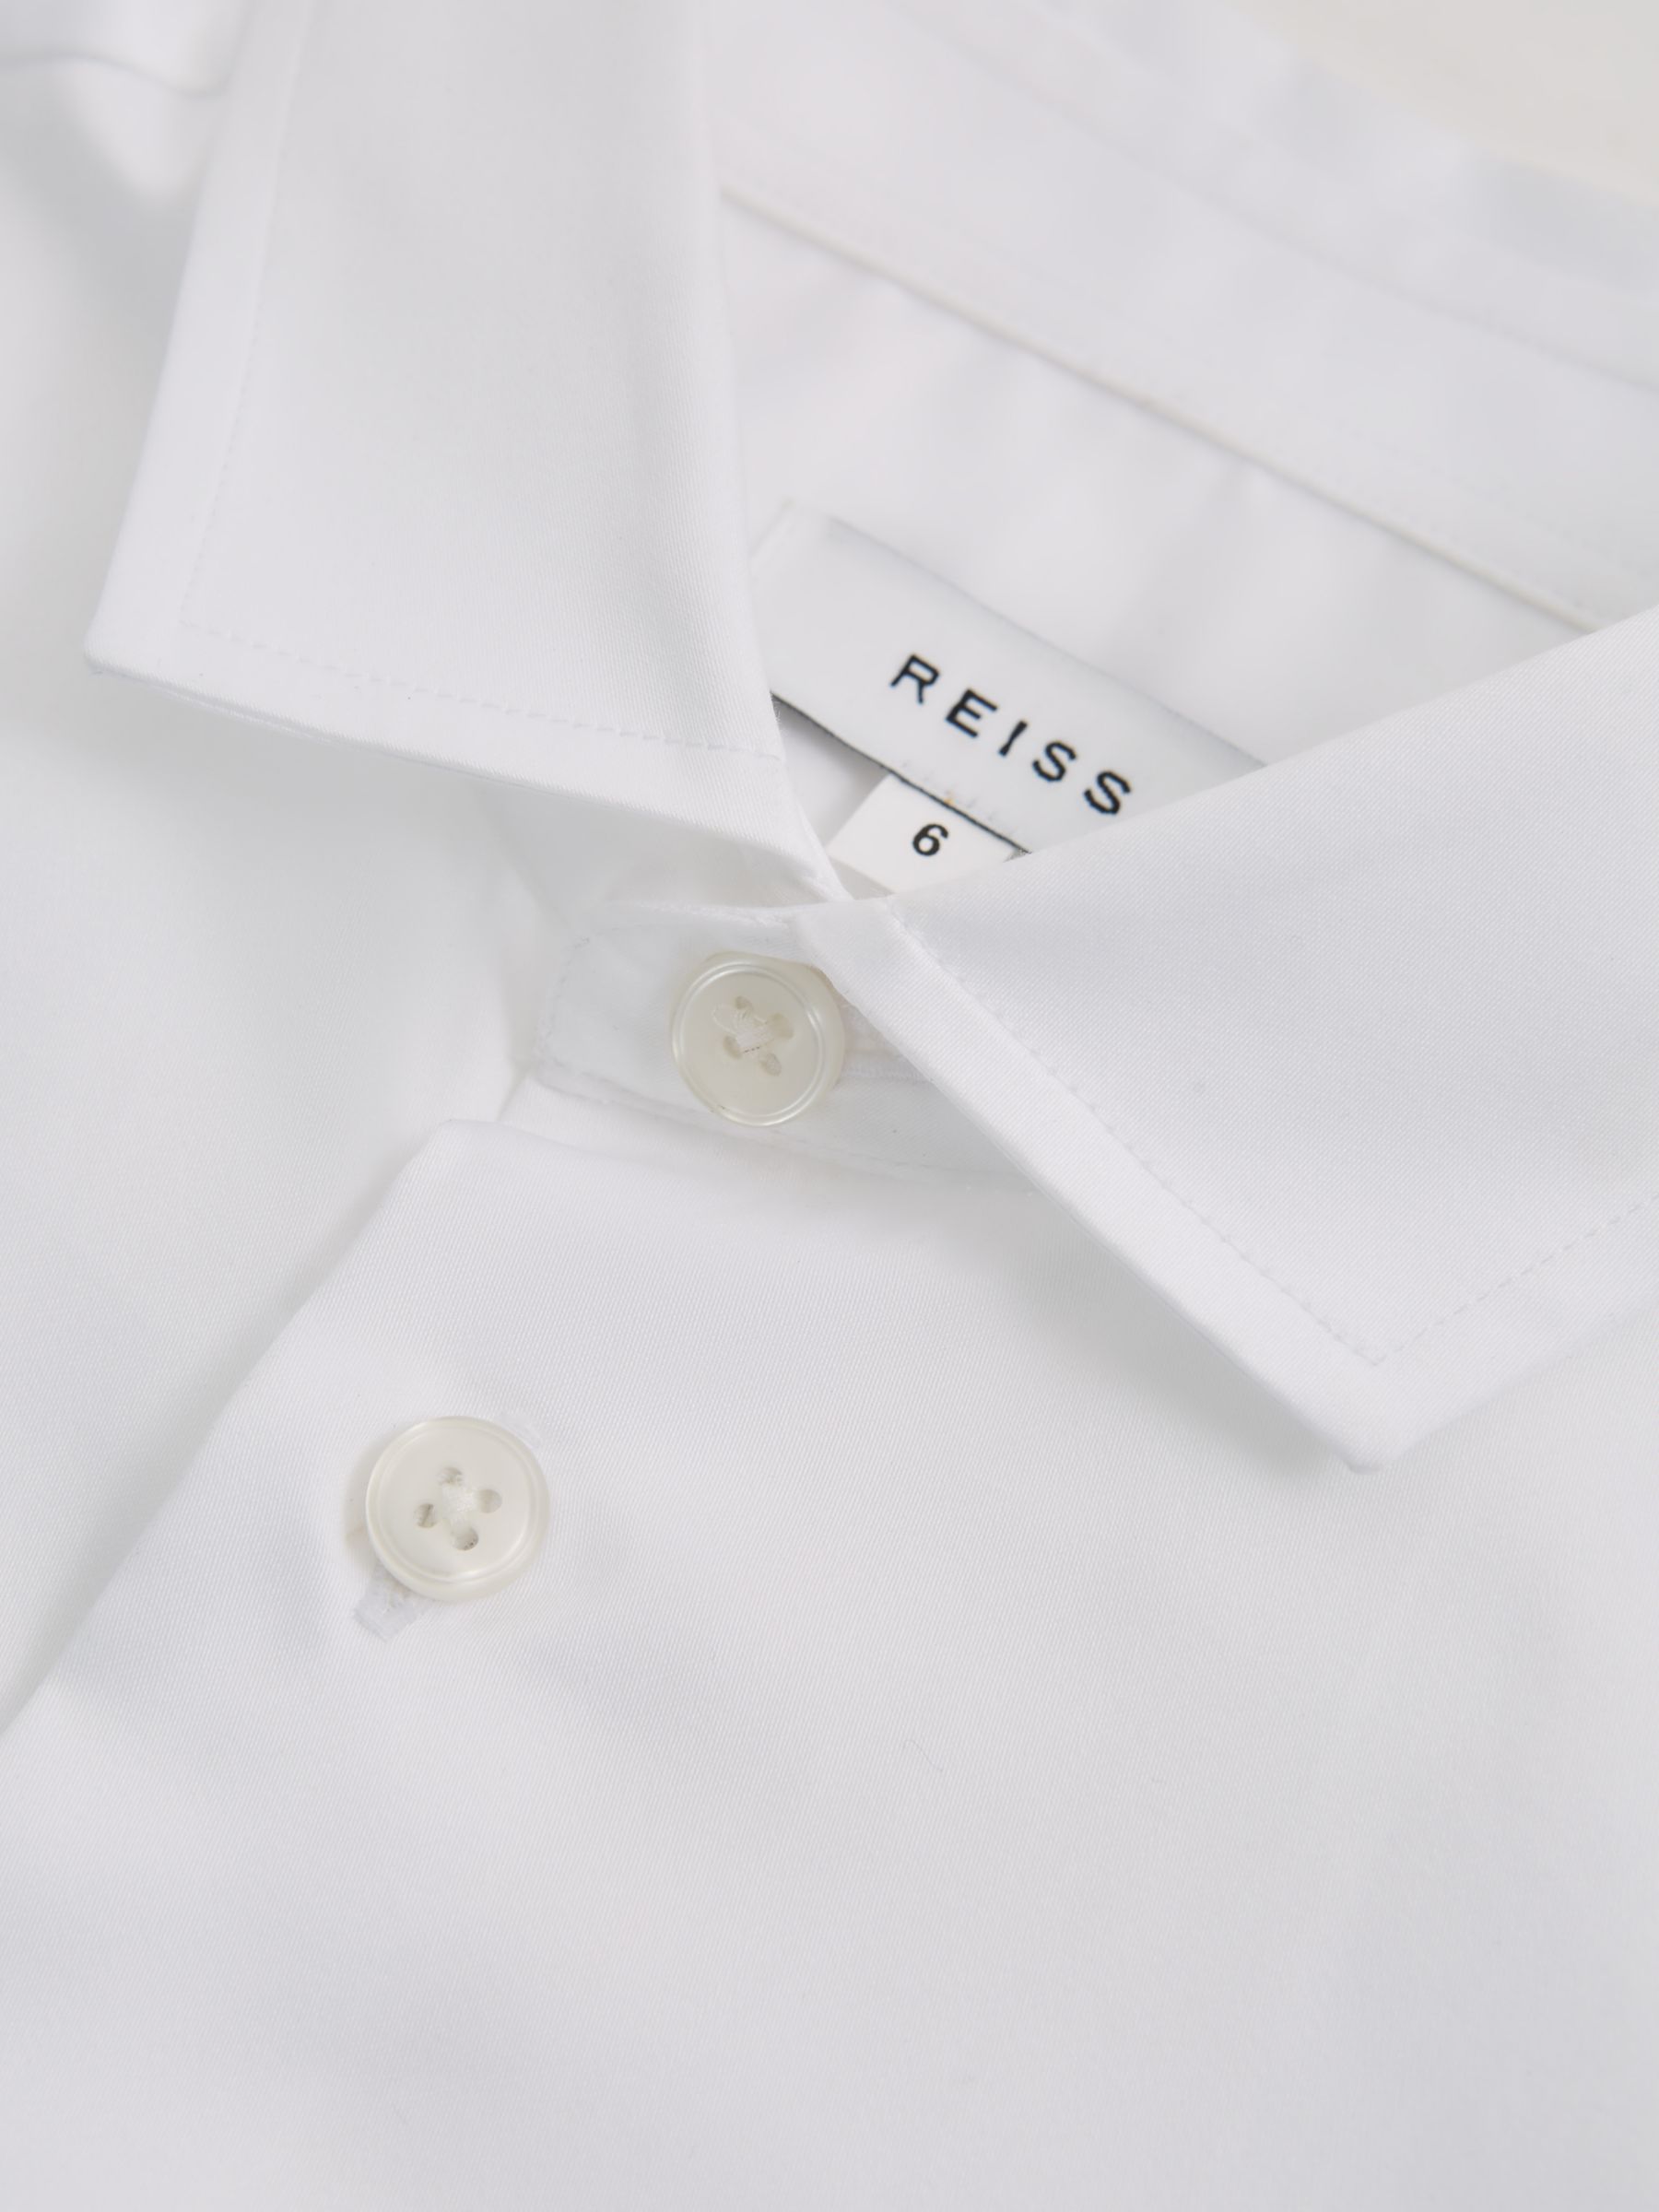 Reiss Kids' Remote Cotton Poplin Shirt, White, 4-5 years